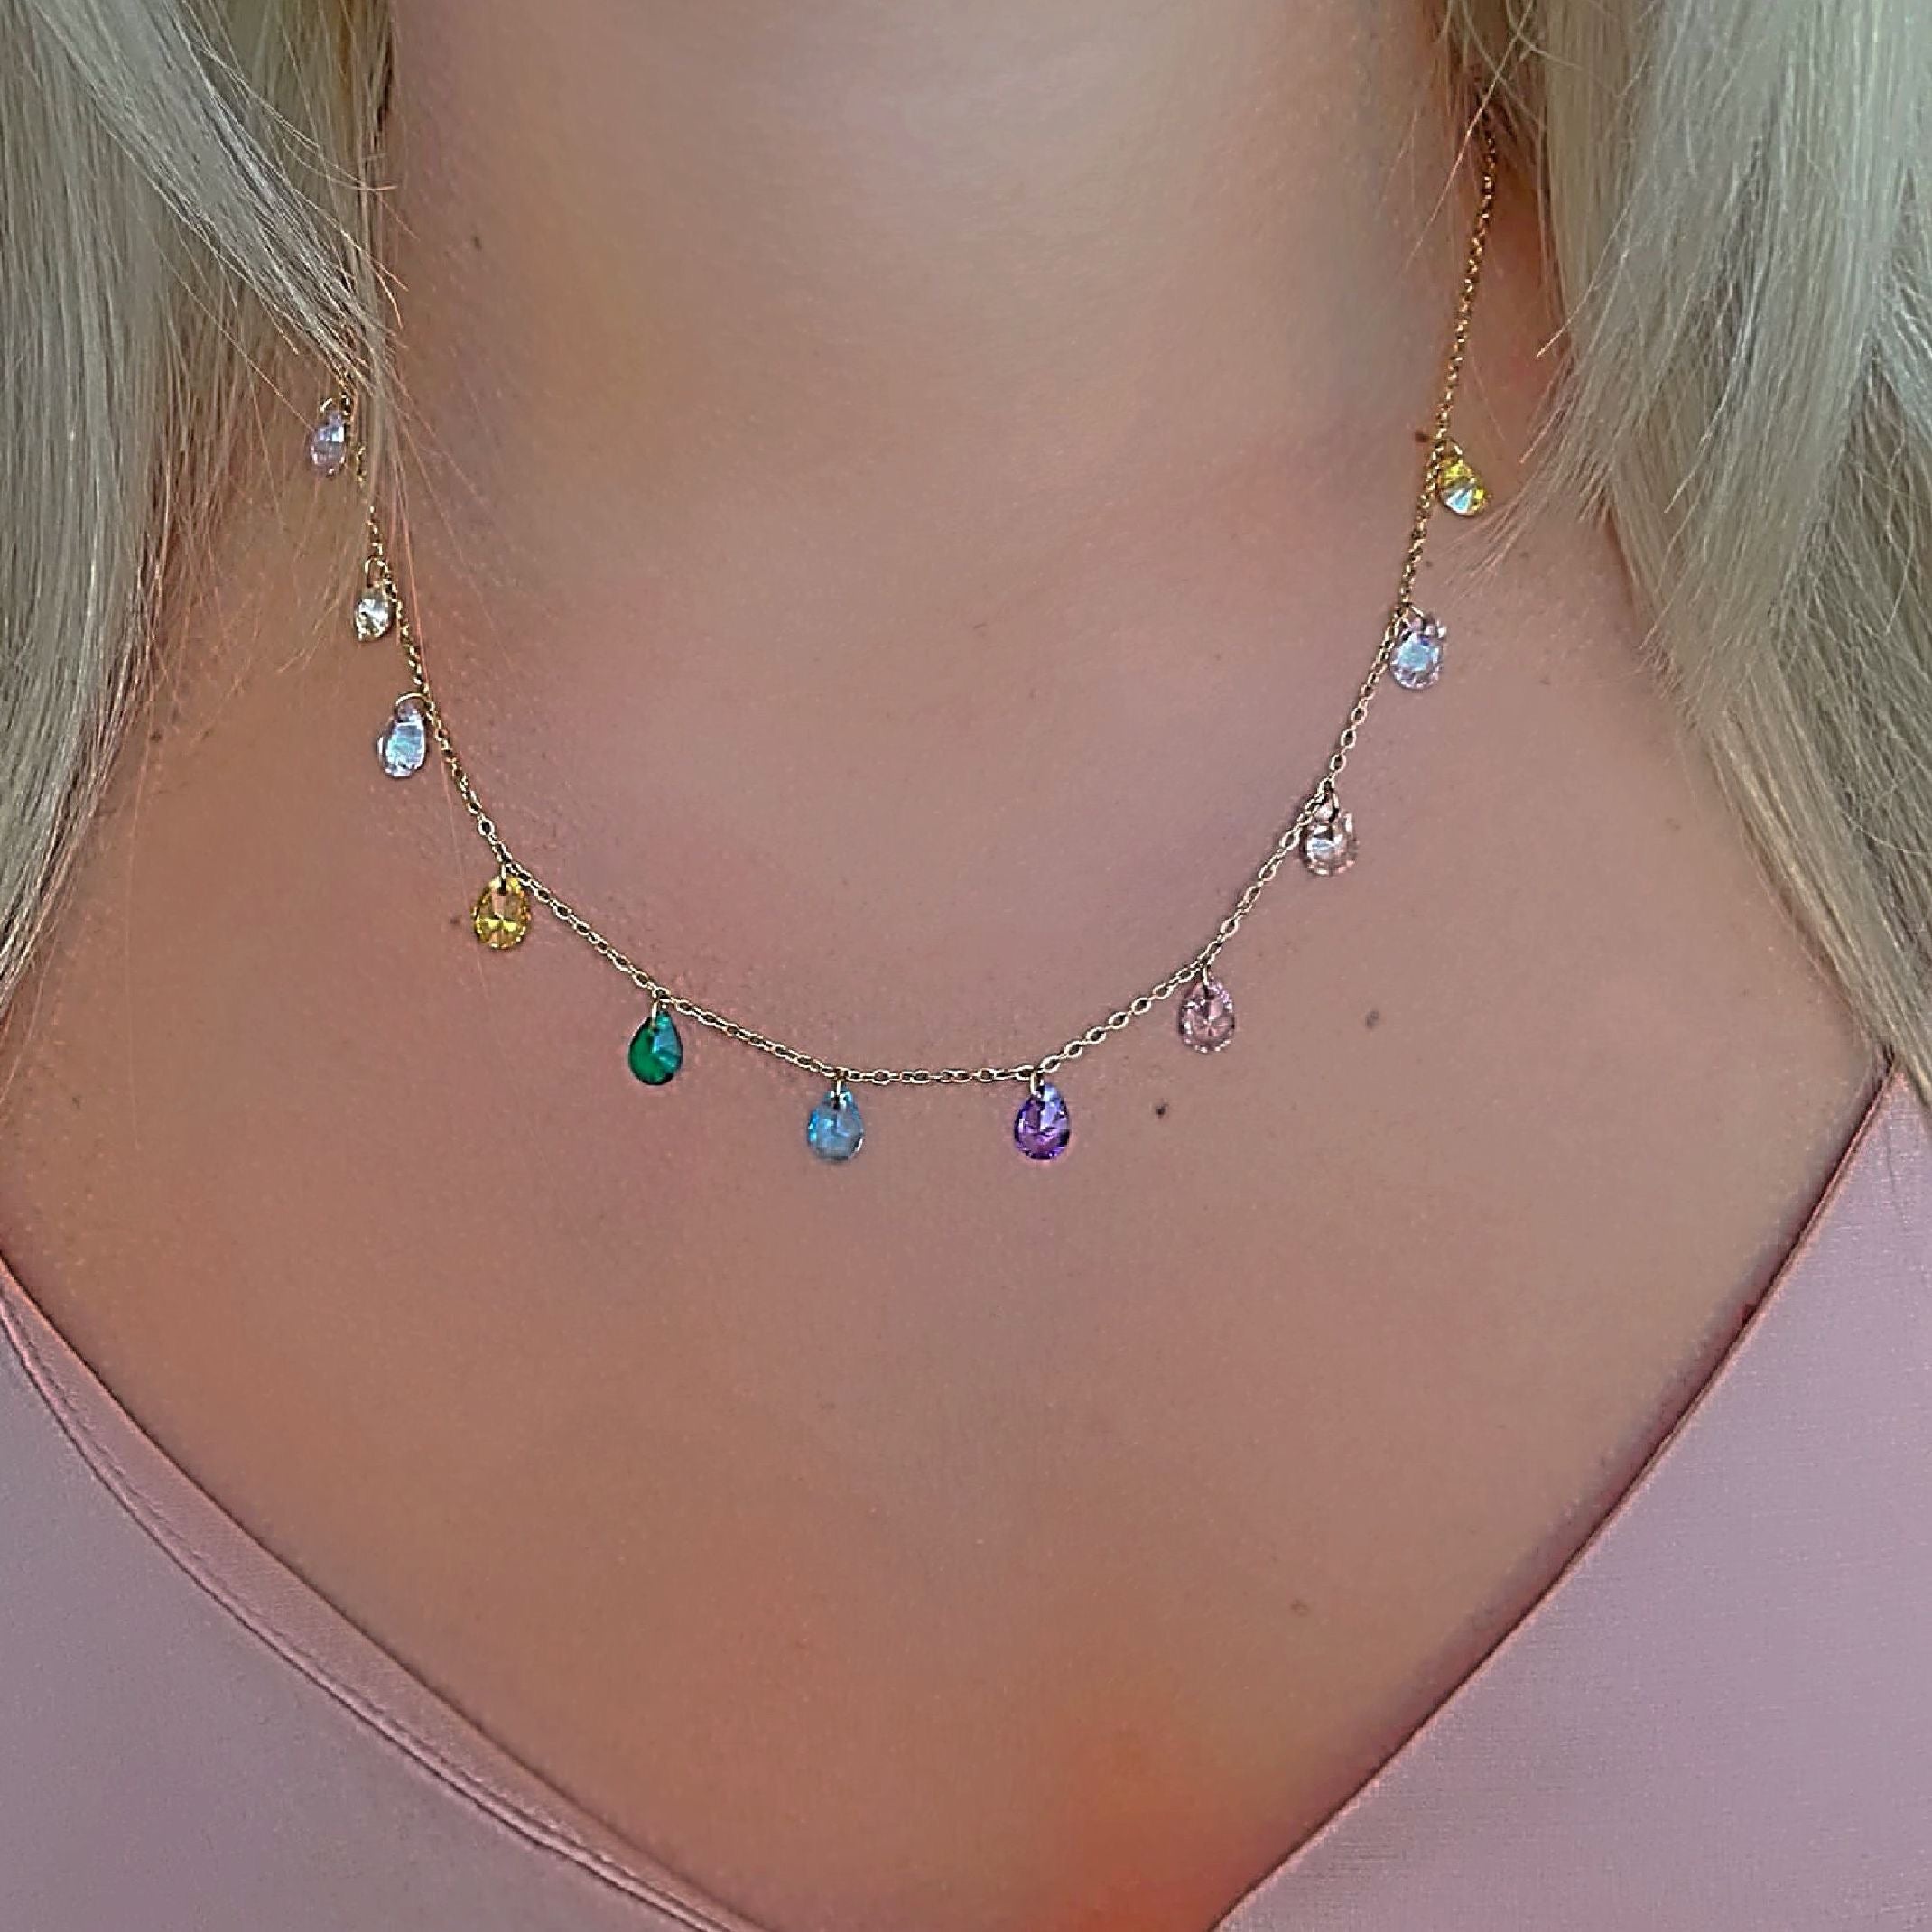 Colourful gemstone necklace